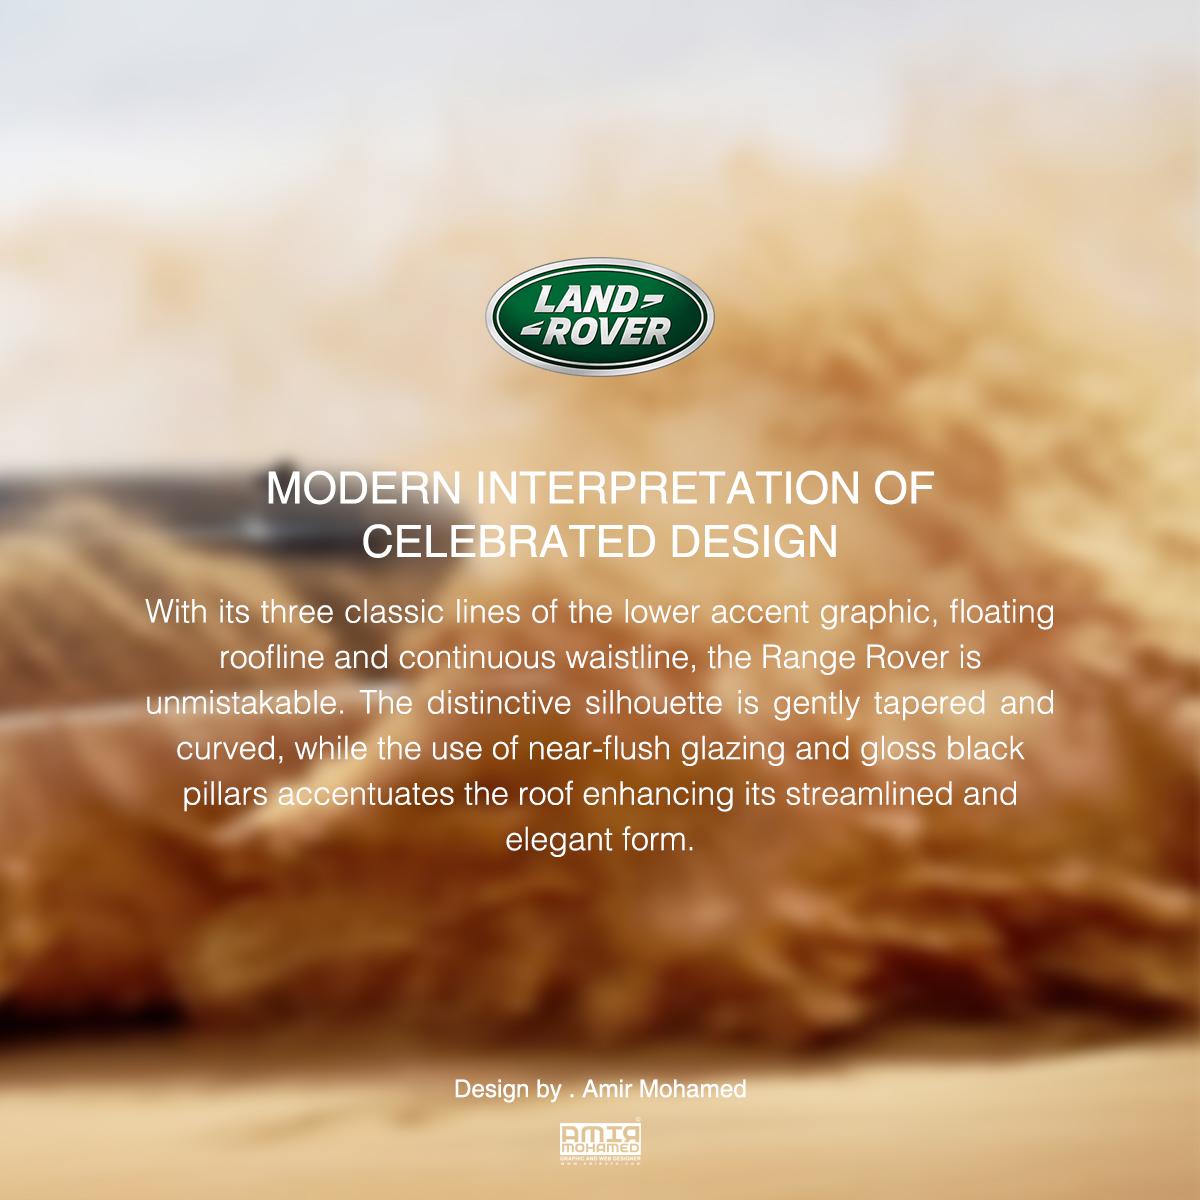 Land Rover car desert egypt fast animals run social media ads modern Photo Manipulation 